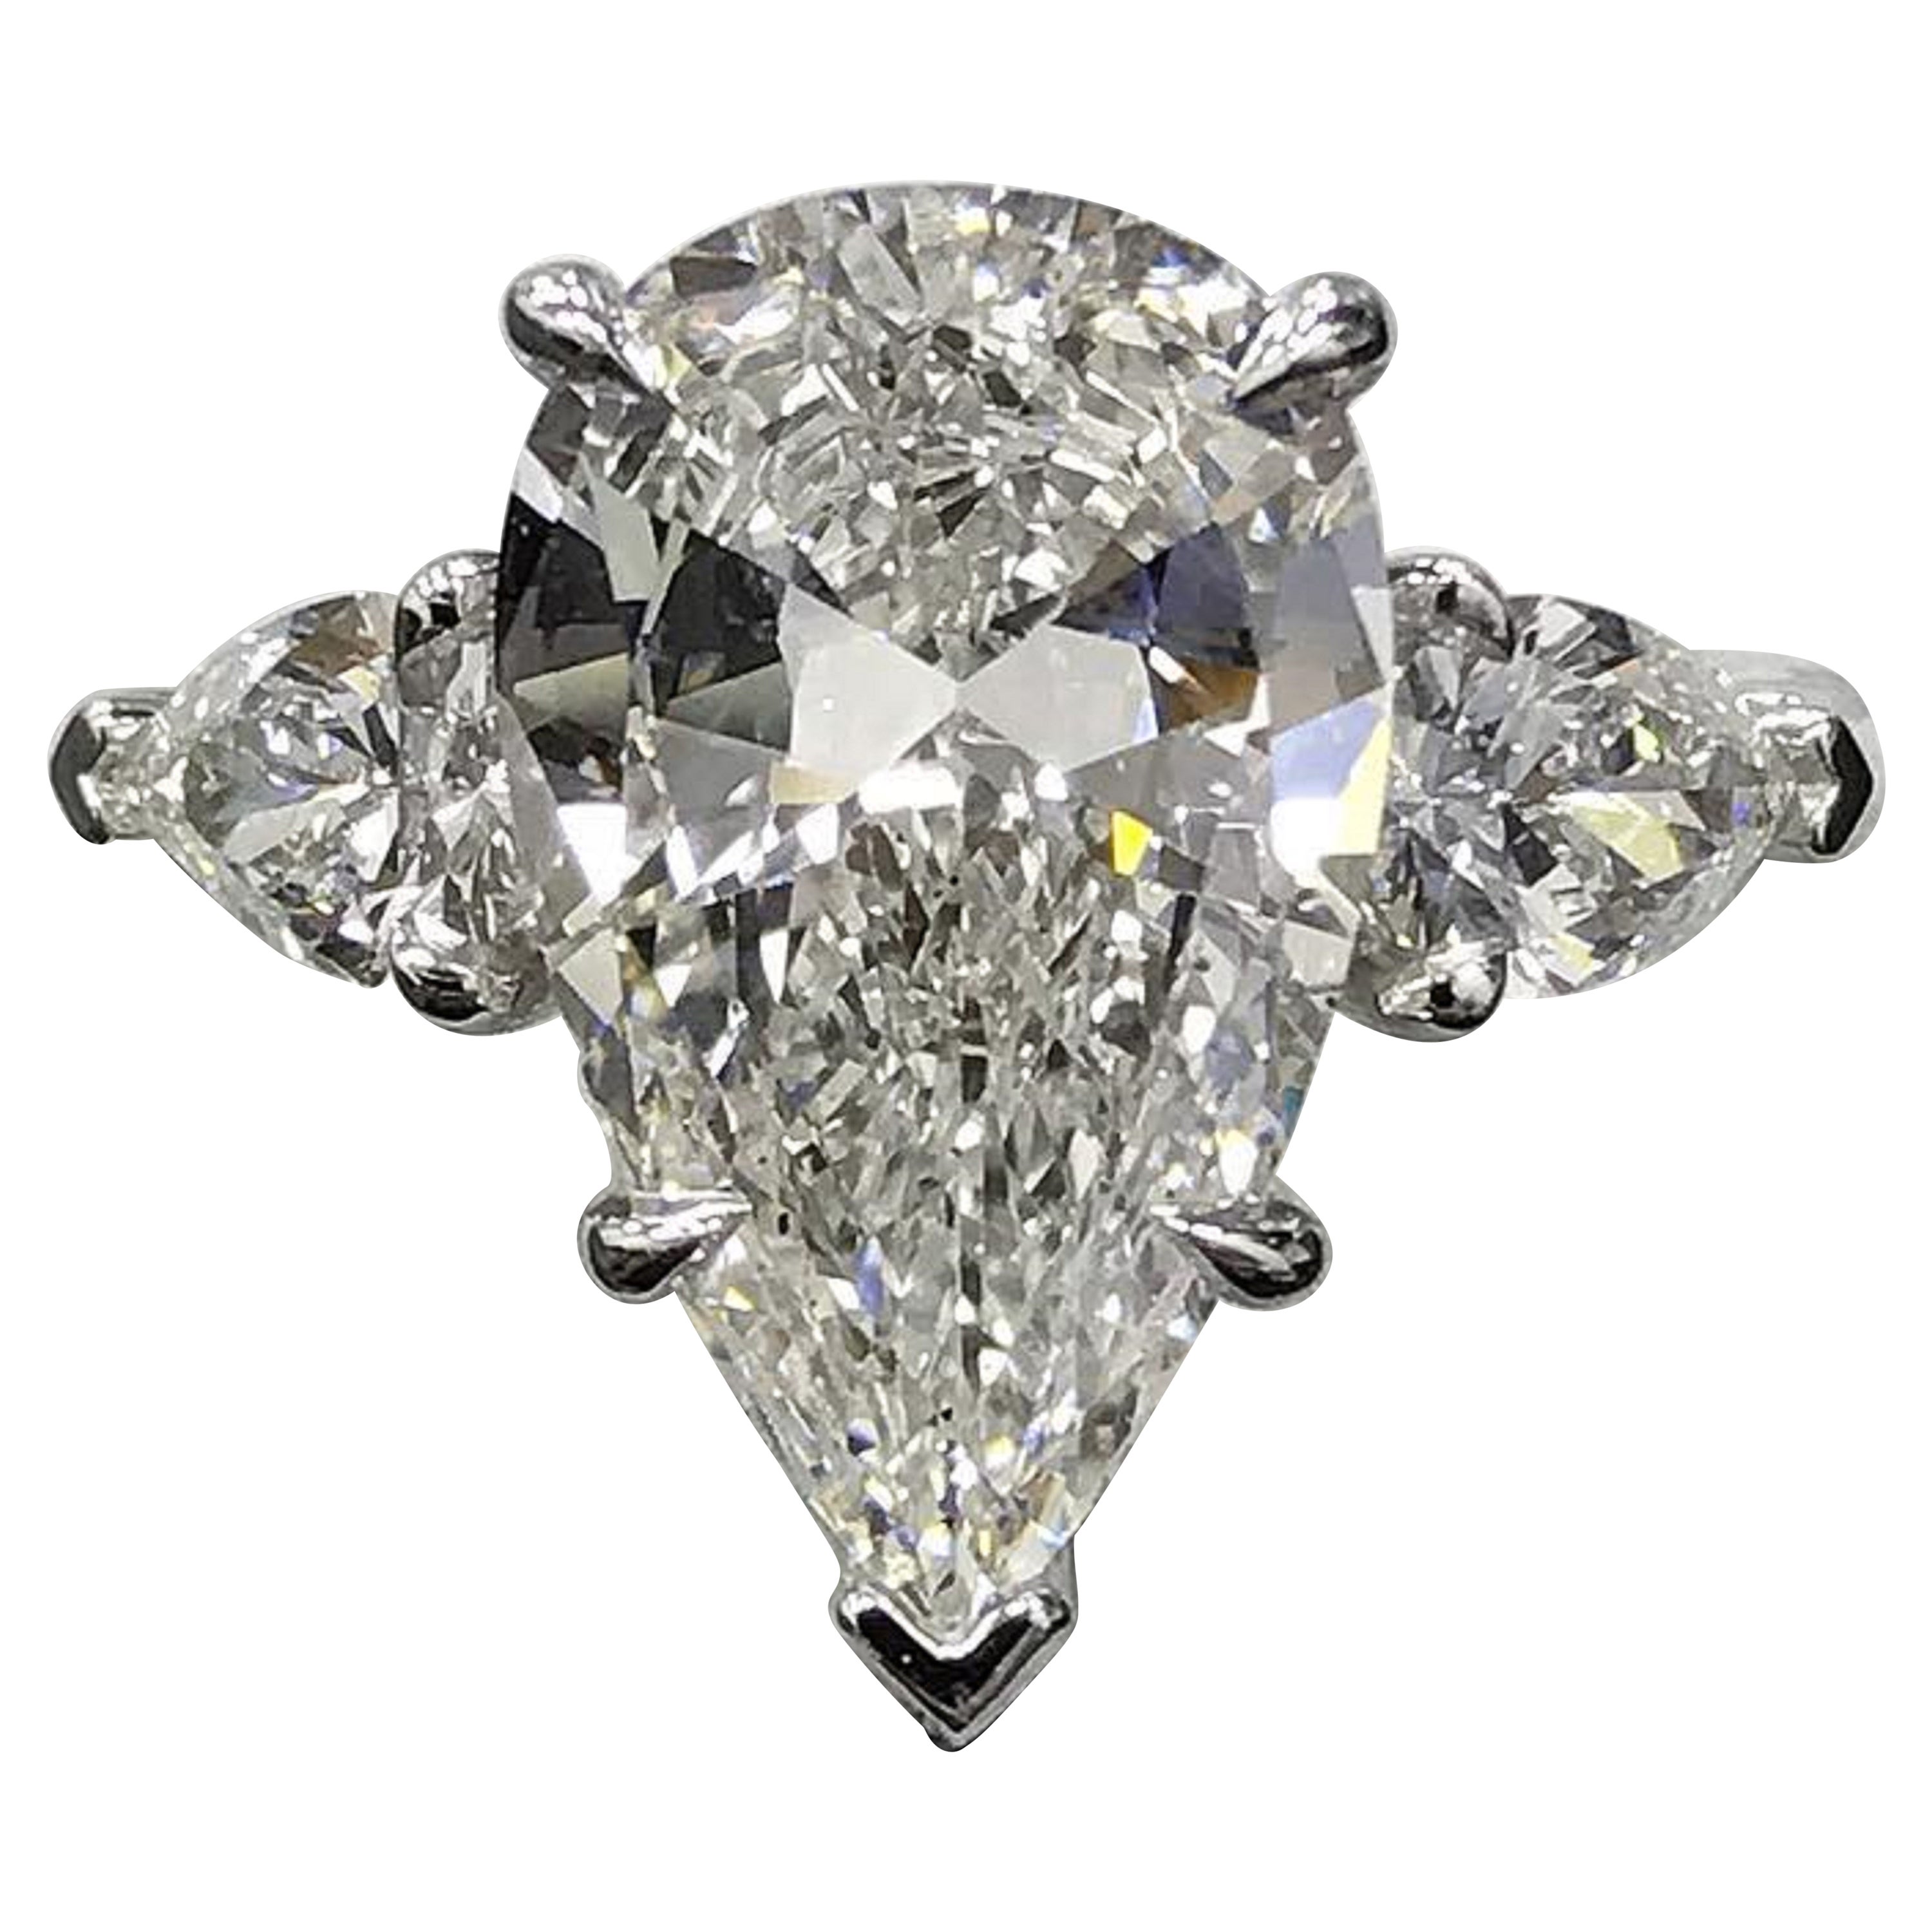 Internally Flawless GIA Certified 4 Carat Pear Cut Diamond Ring 